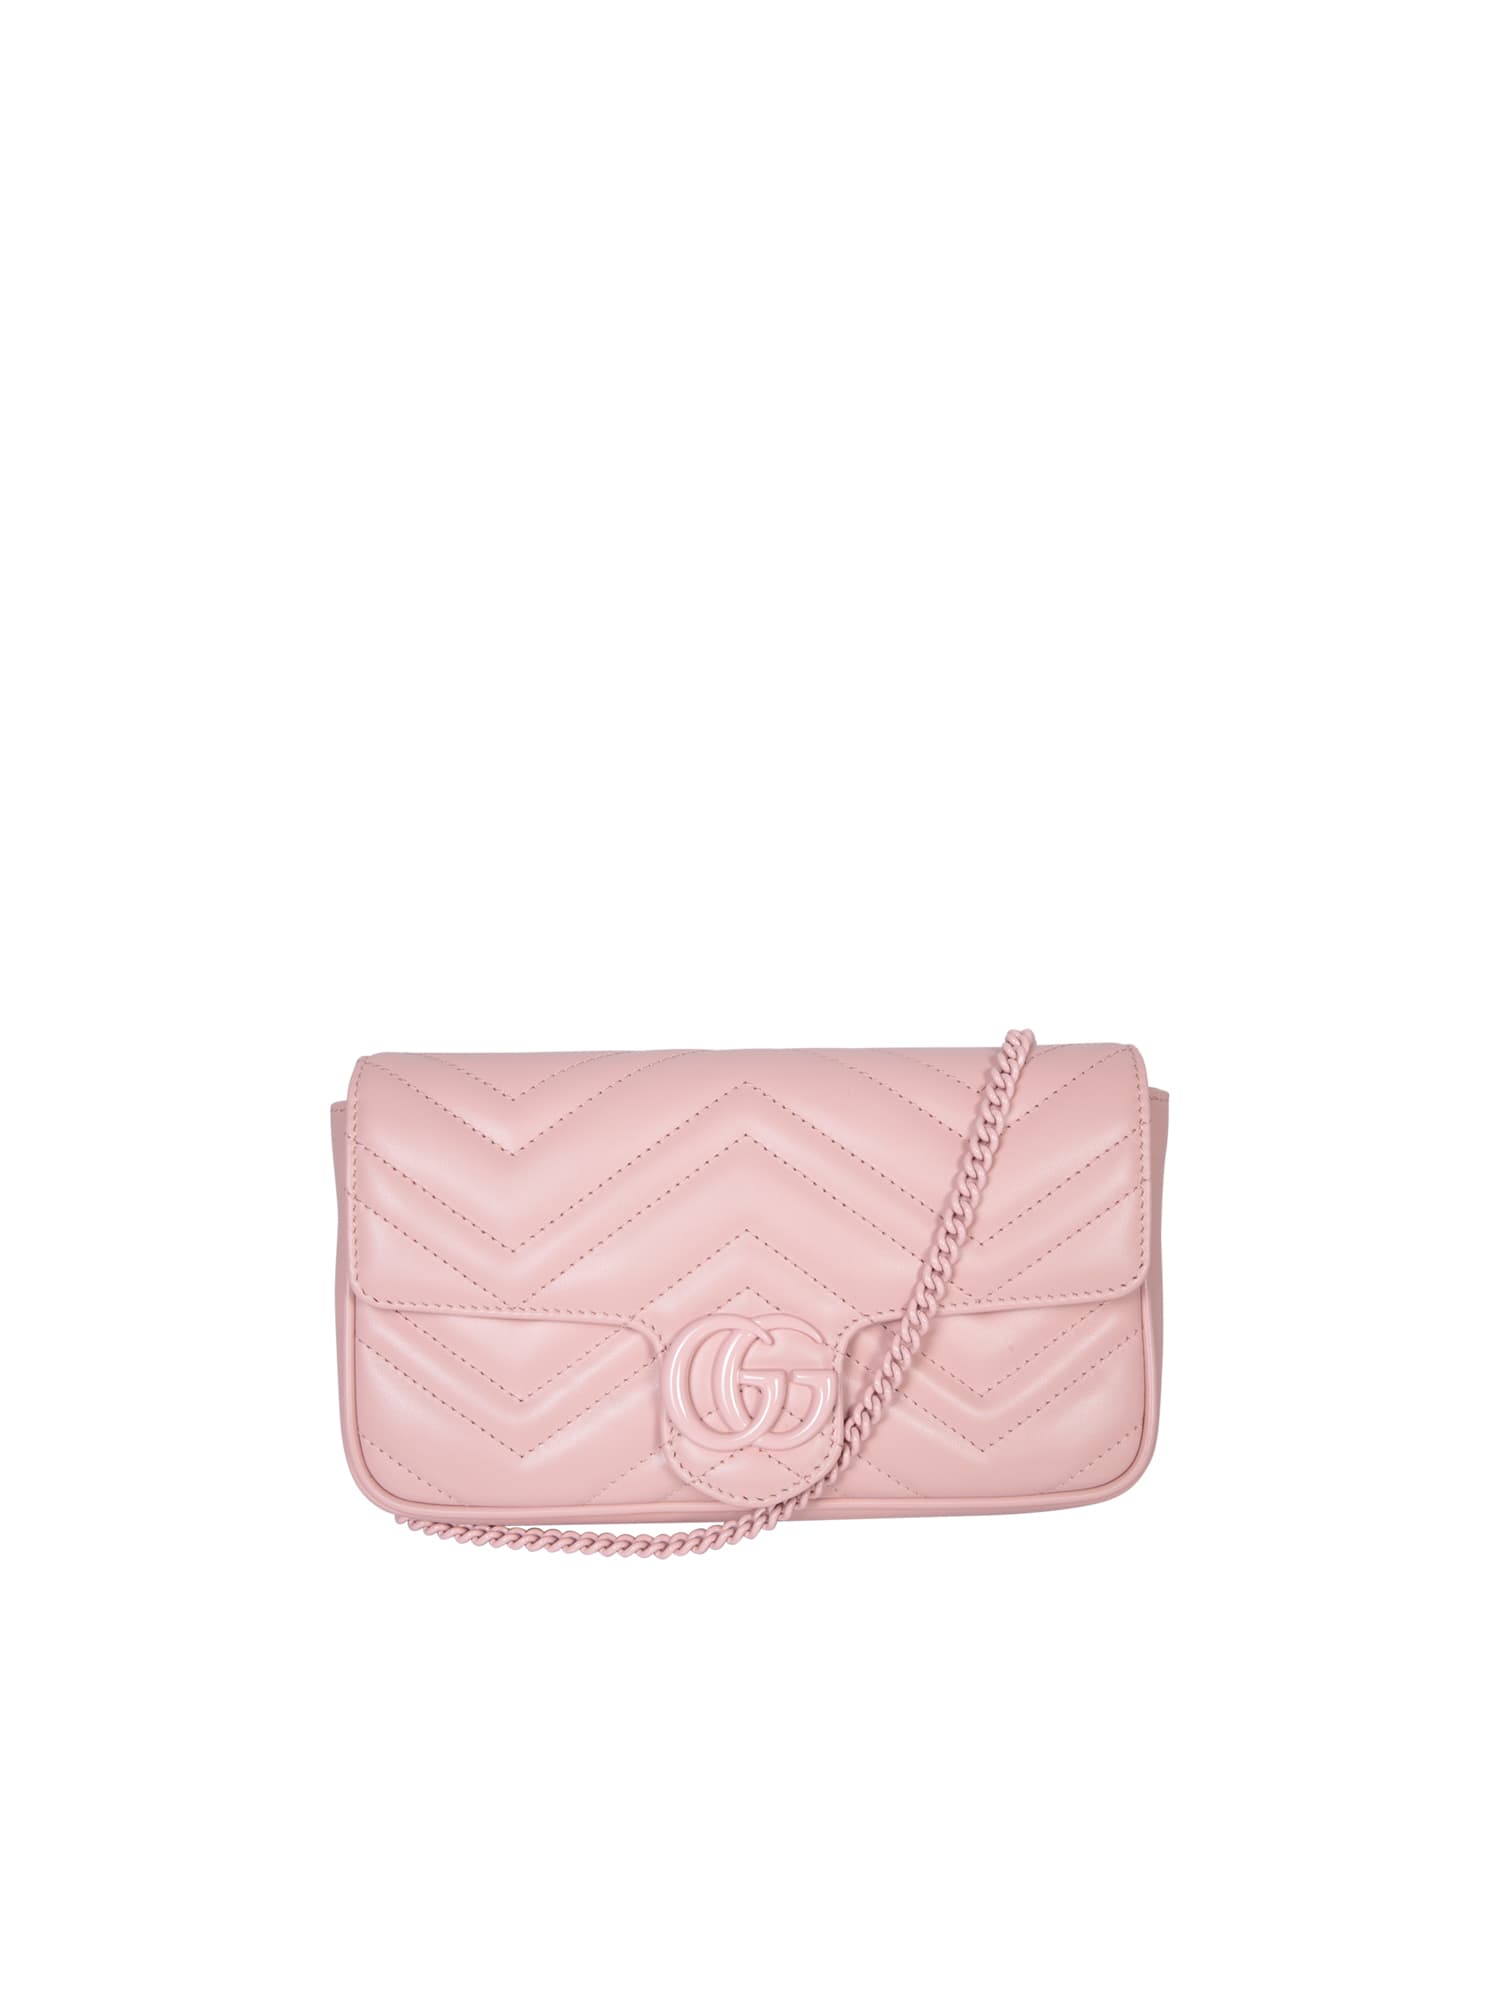 Marmont Gg Tonal Pink Mini Bag